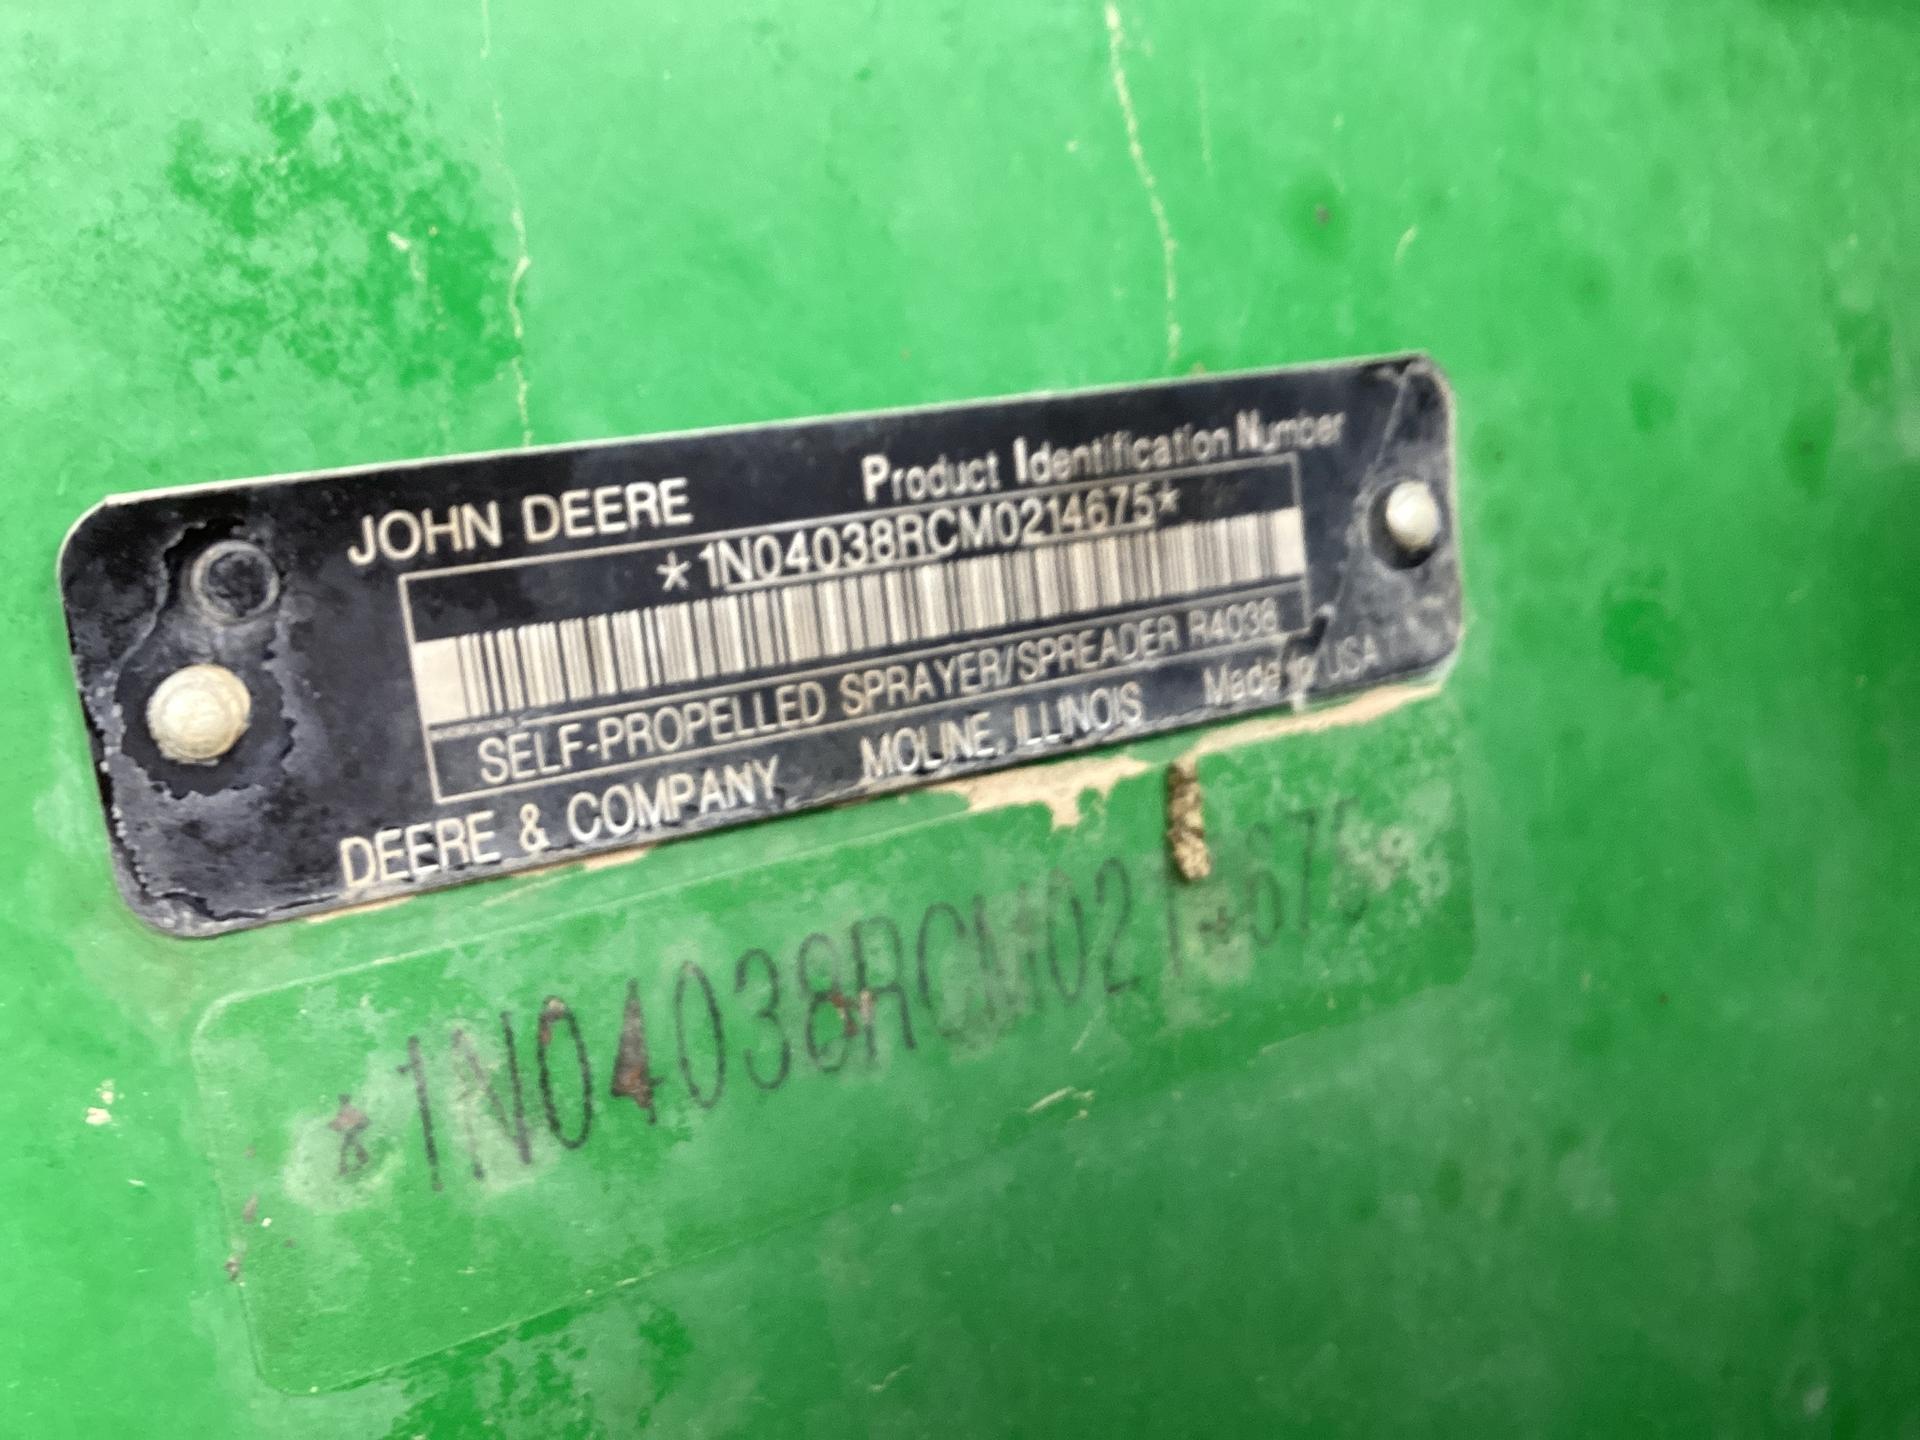 2021 John Deere R4038